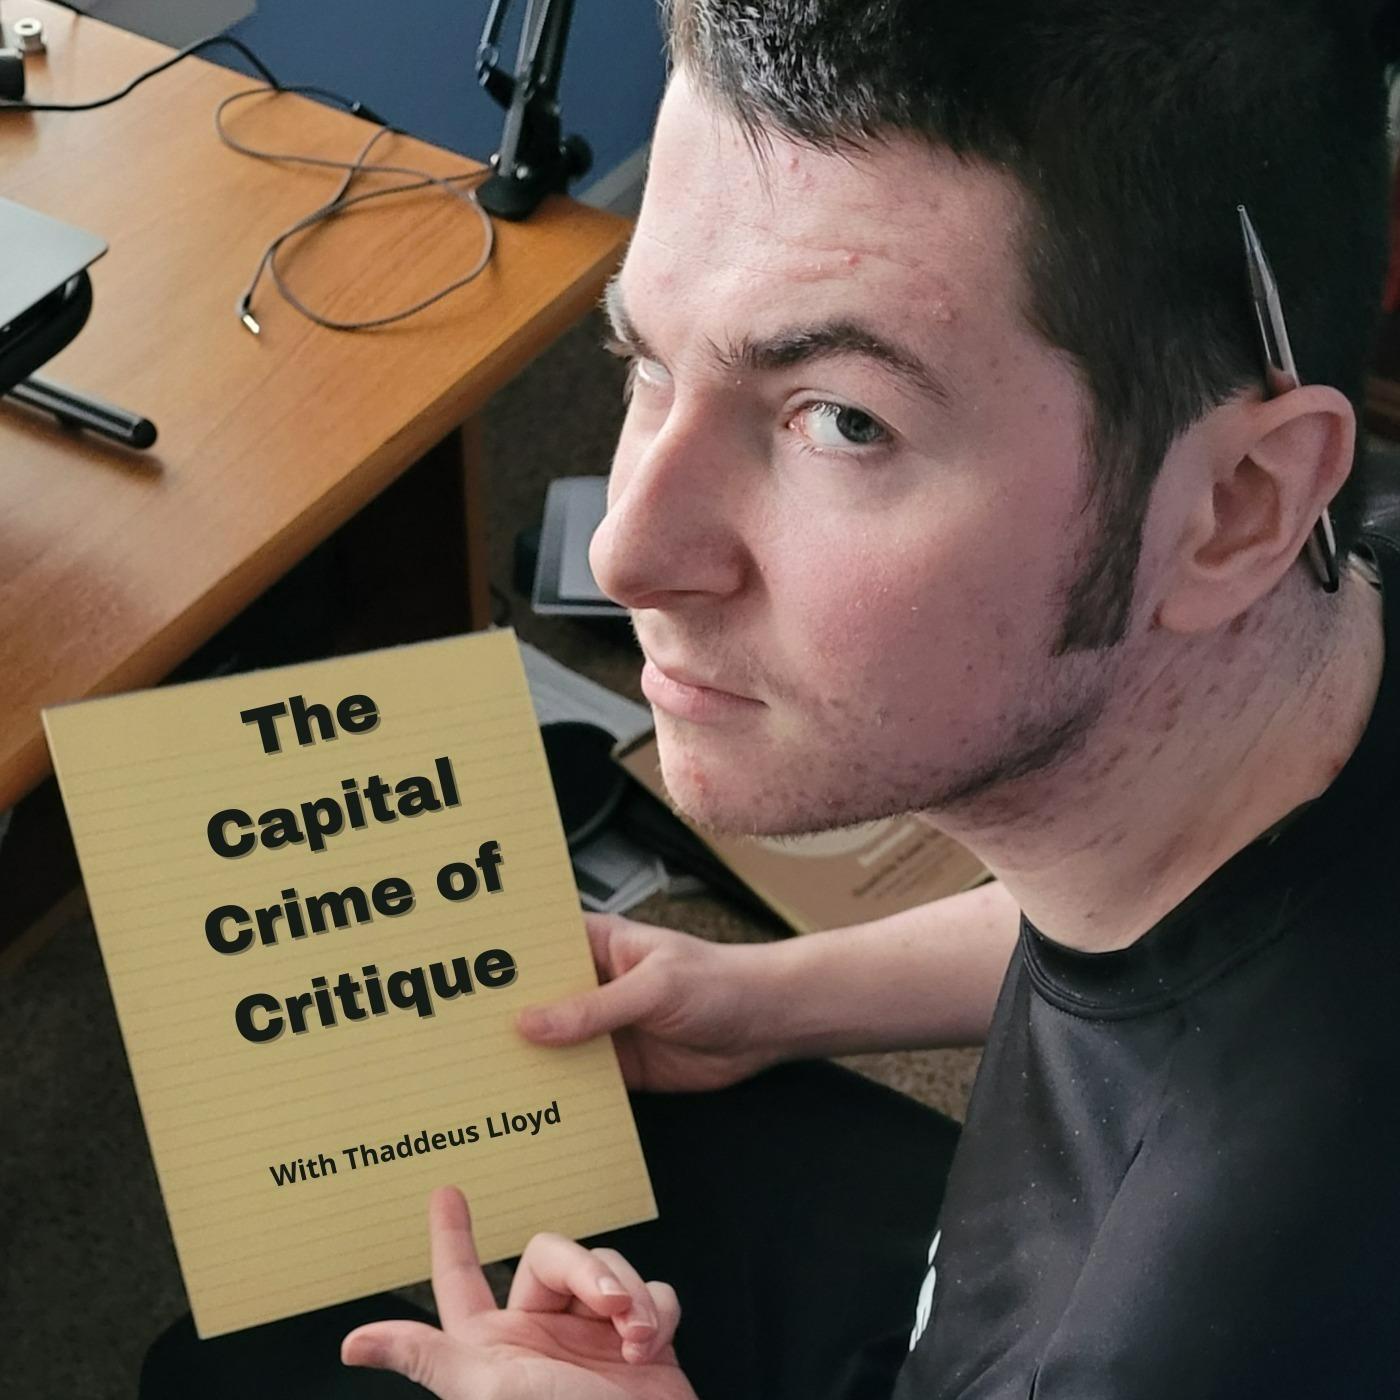 The Capital Crime of Critique